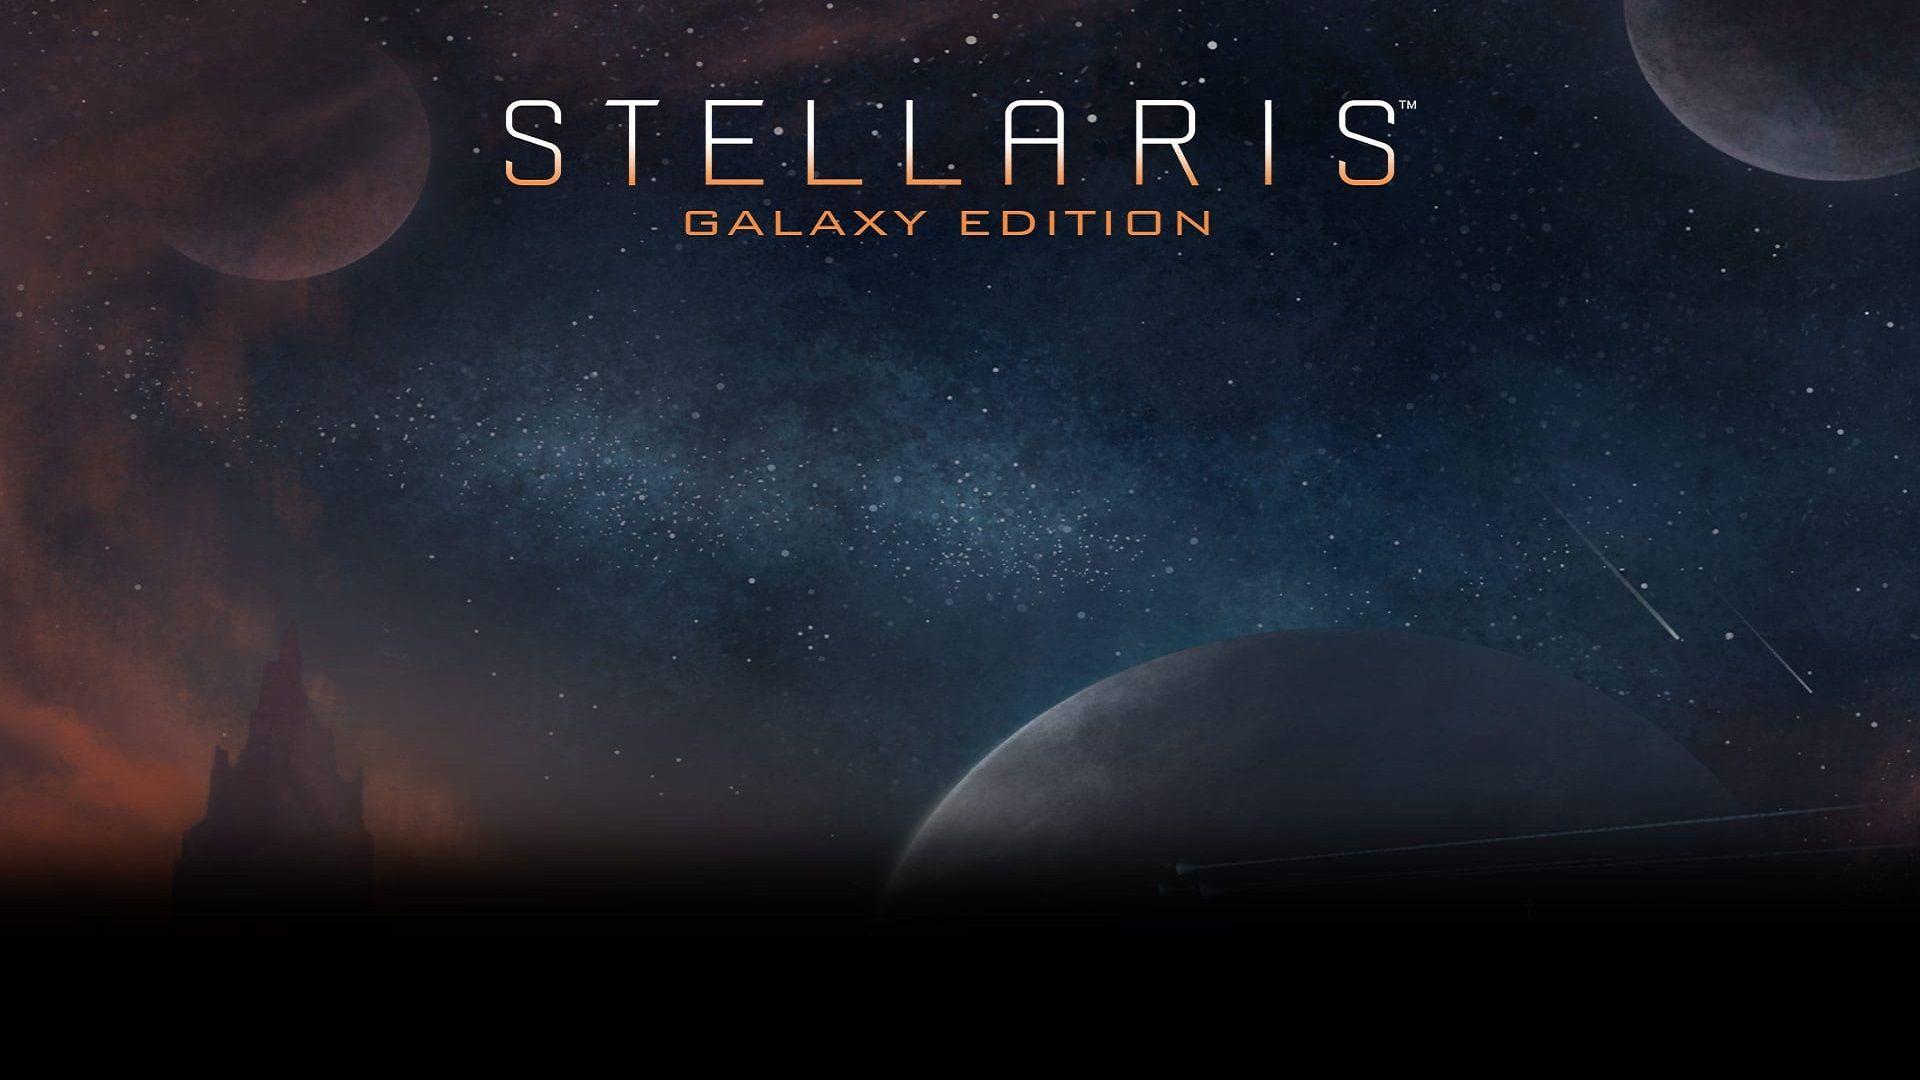 Free download Stellaris HD Wallpaper. Read games reviews, play